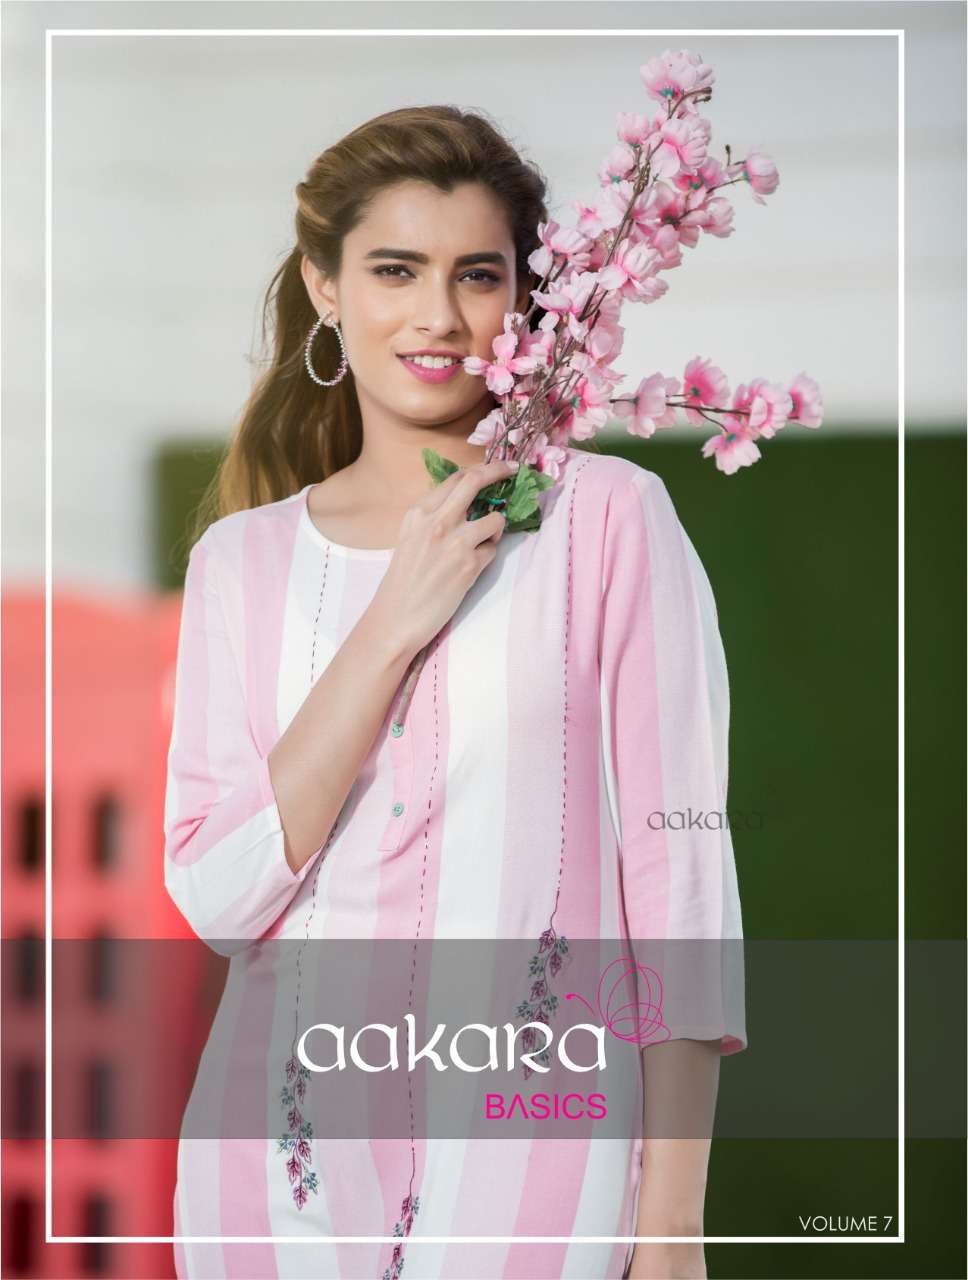 AAKARA BASICS BY AAKARA 7001 TO 7008 SERIES STYLISH FANCY BEAUTIFUL COLORFUL CASUAL WEAR & ETHNIC WEAR RAYON PRINTED KURTIS AT WHOLESALE PRICE